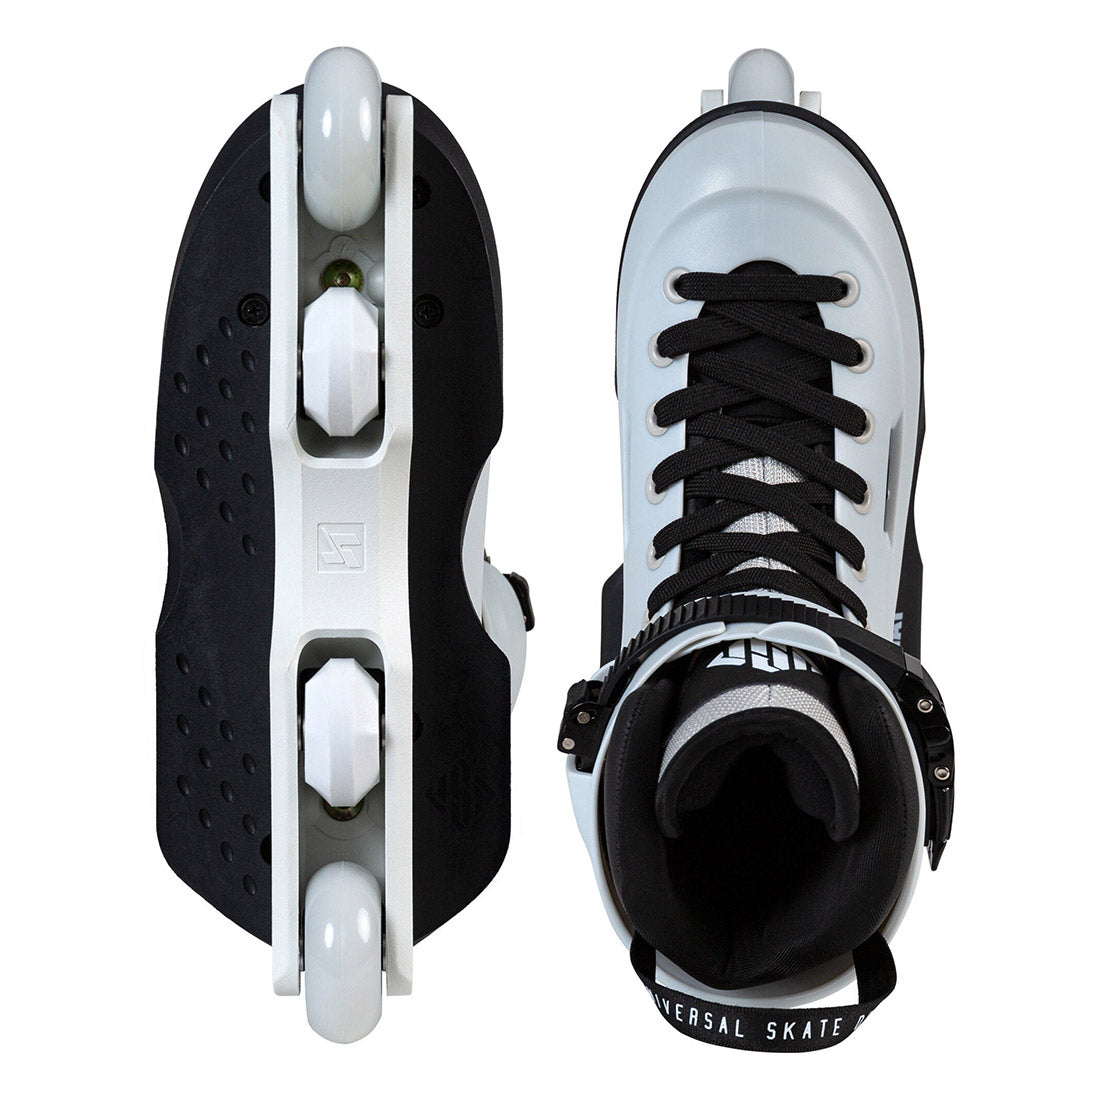 USD Sway 58 XXIV Skate - Grey/Black Inline Aggressive Skates